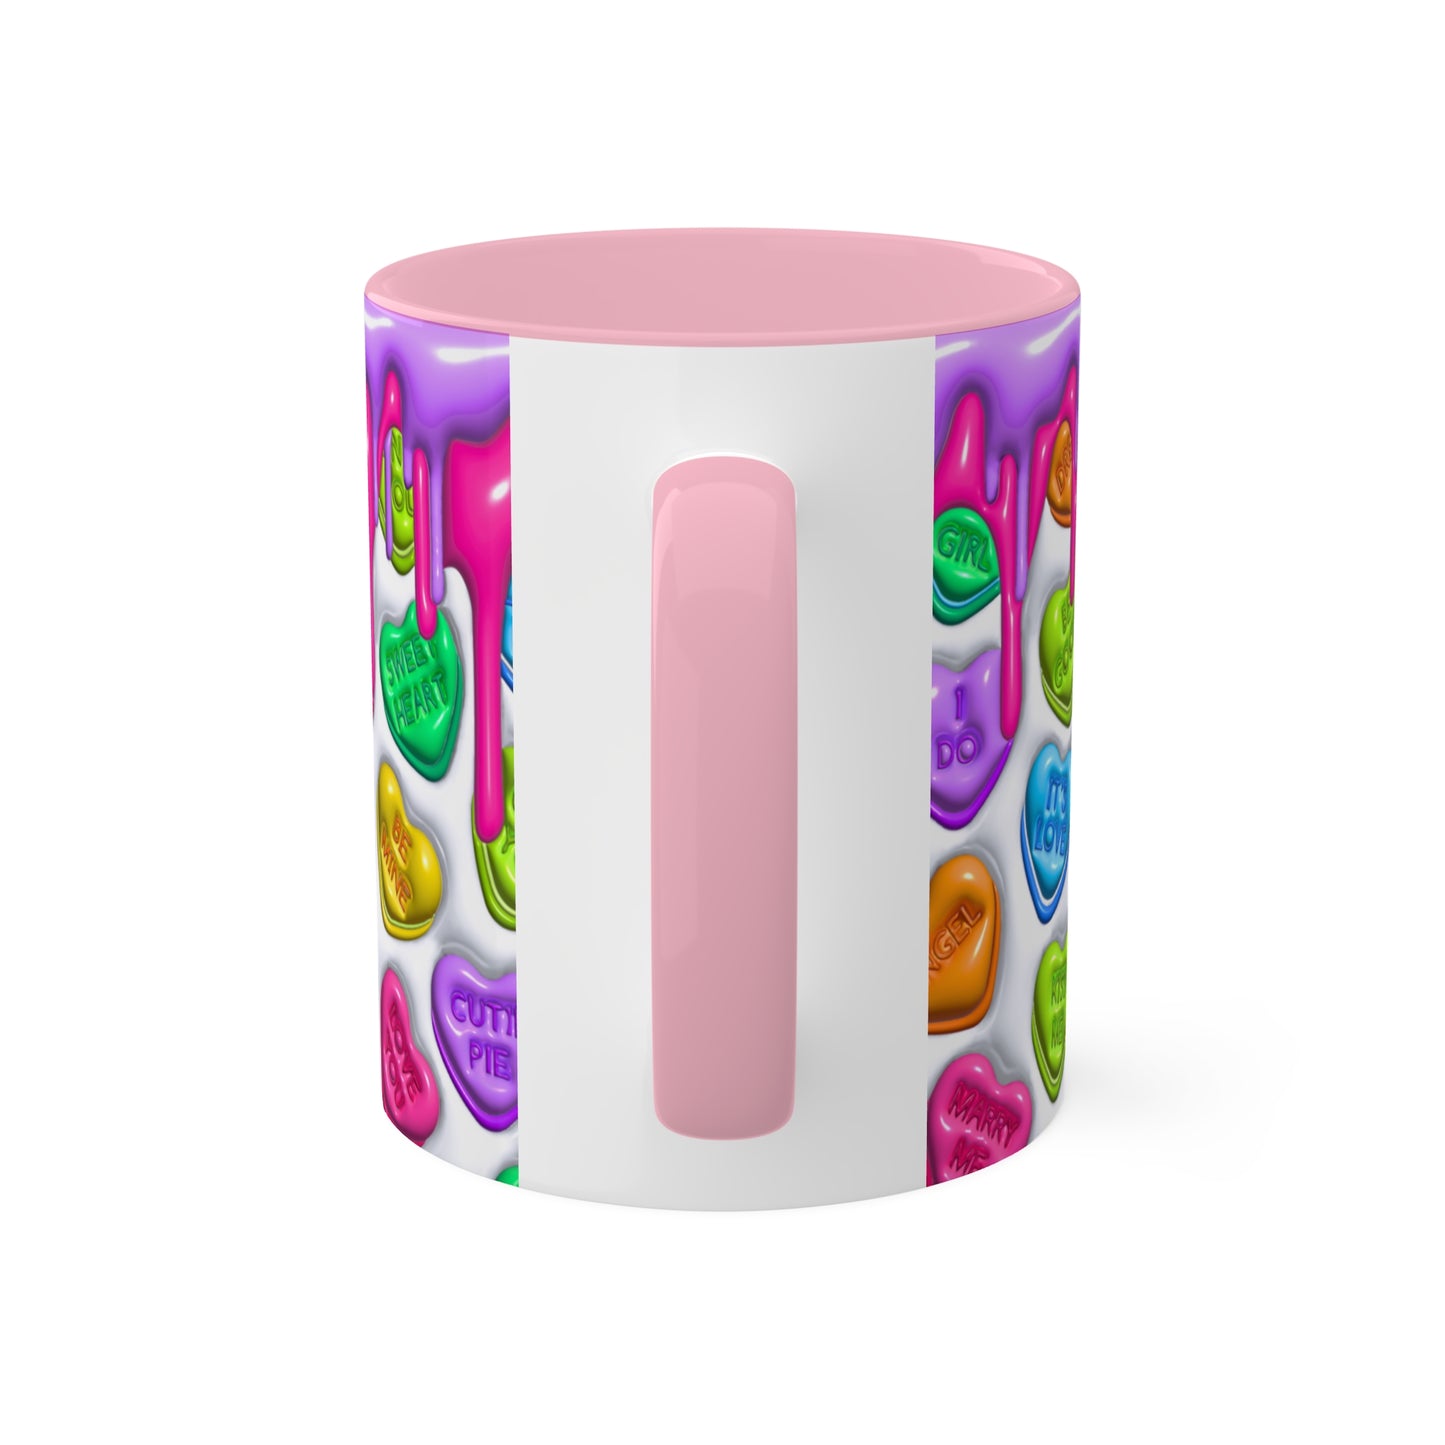 3D Valentine heart mug, Funny Valentine Heart Candy, Inflated 3D Mug wrap, heart candy mug, conversation heart mug, Colorful Mugs, 11oz